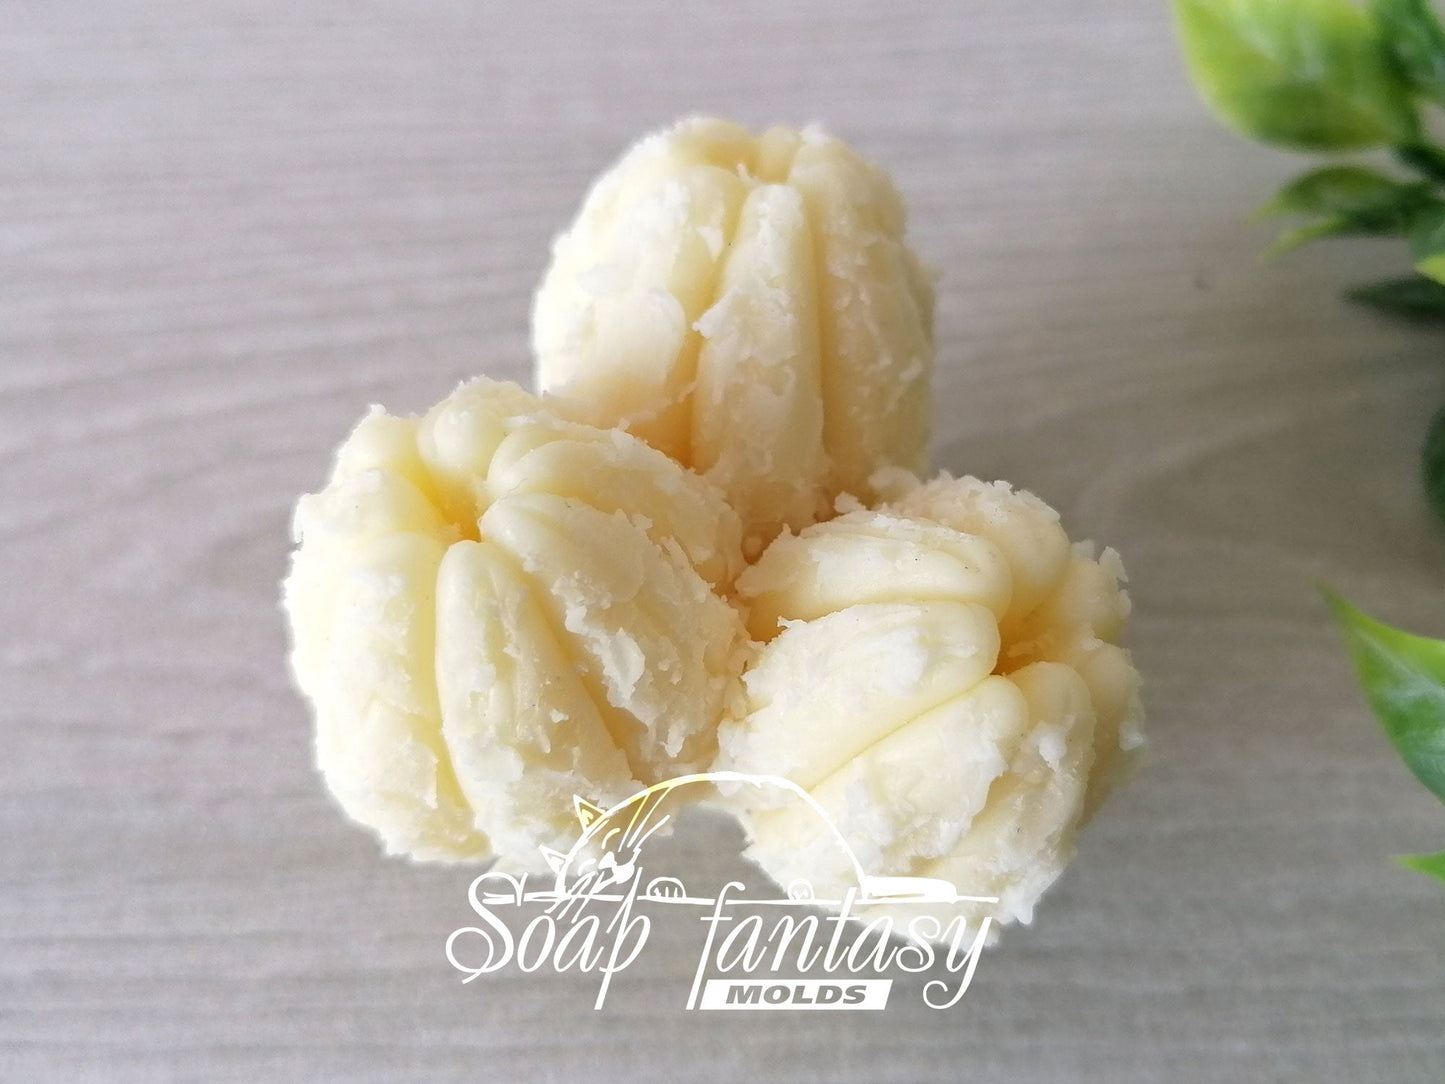 GARAGE SALE >> Triplet lemons silicone mold for soap making